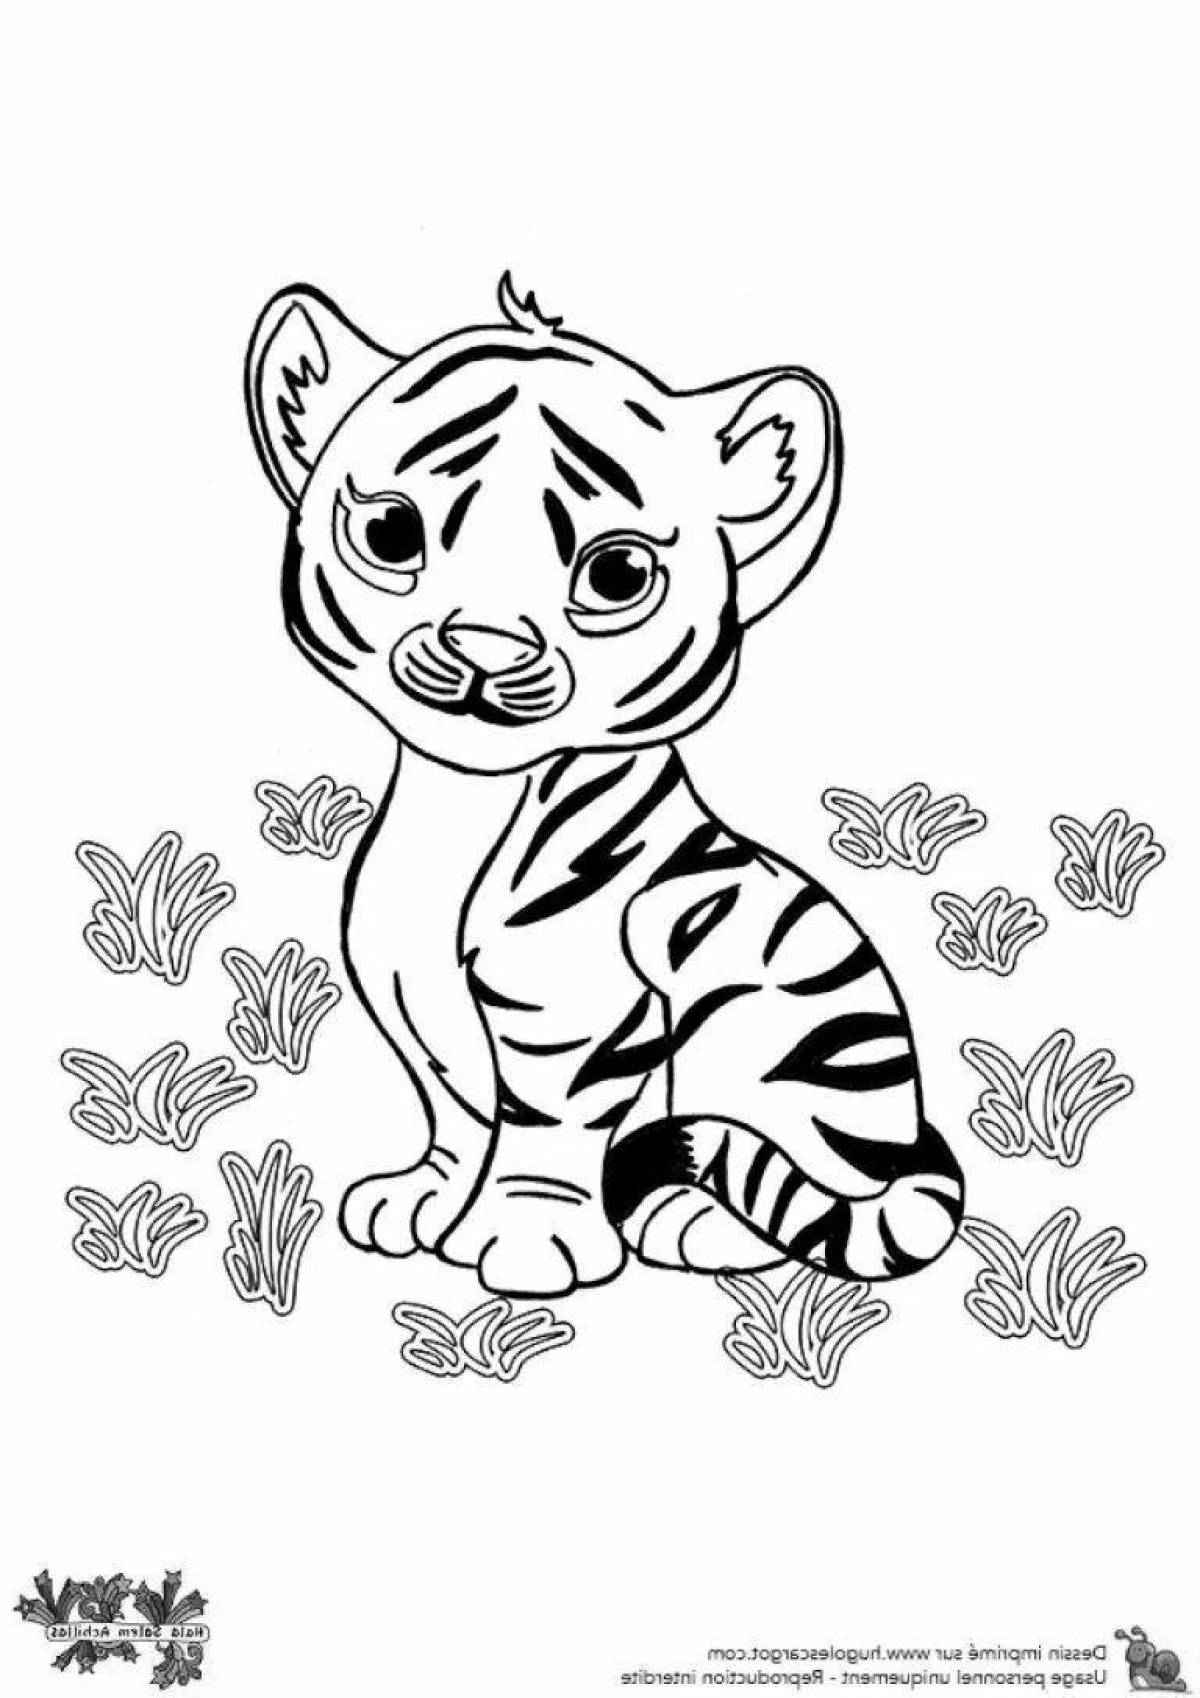 Tiger cub for girls #1